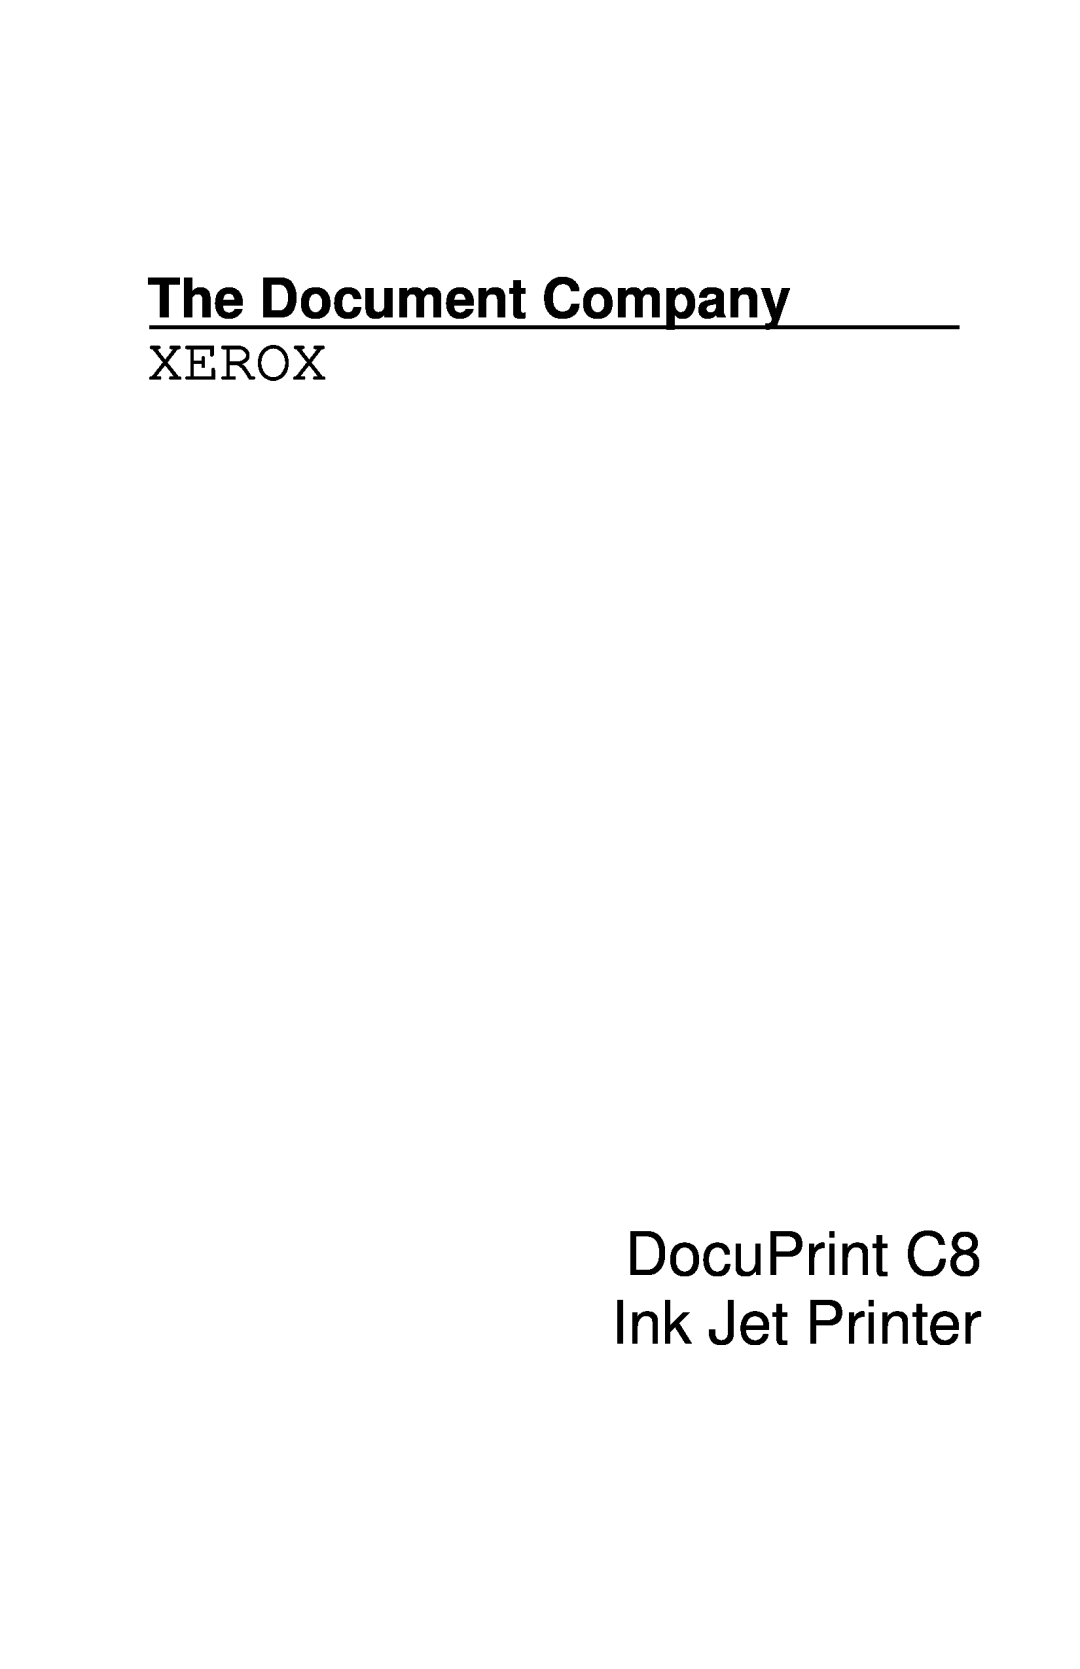 Xerox Inkjet Printer manual The Document Company, Xerox, DocuPrint C8 Ink Jet Printer 